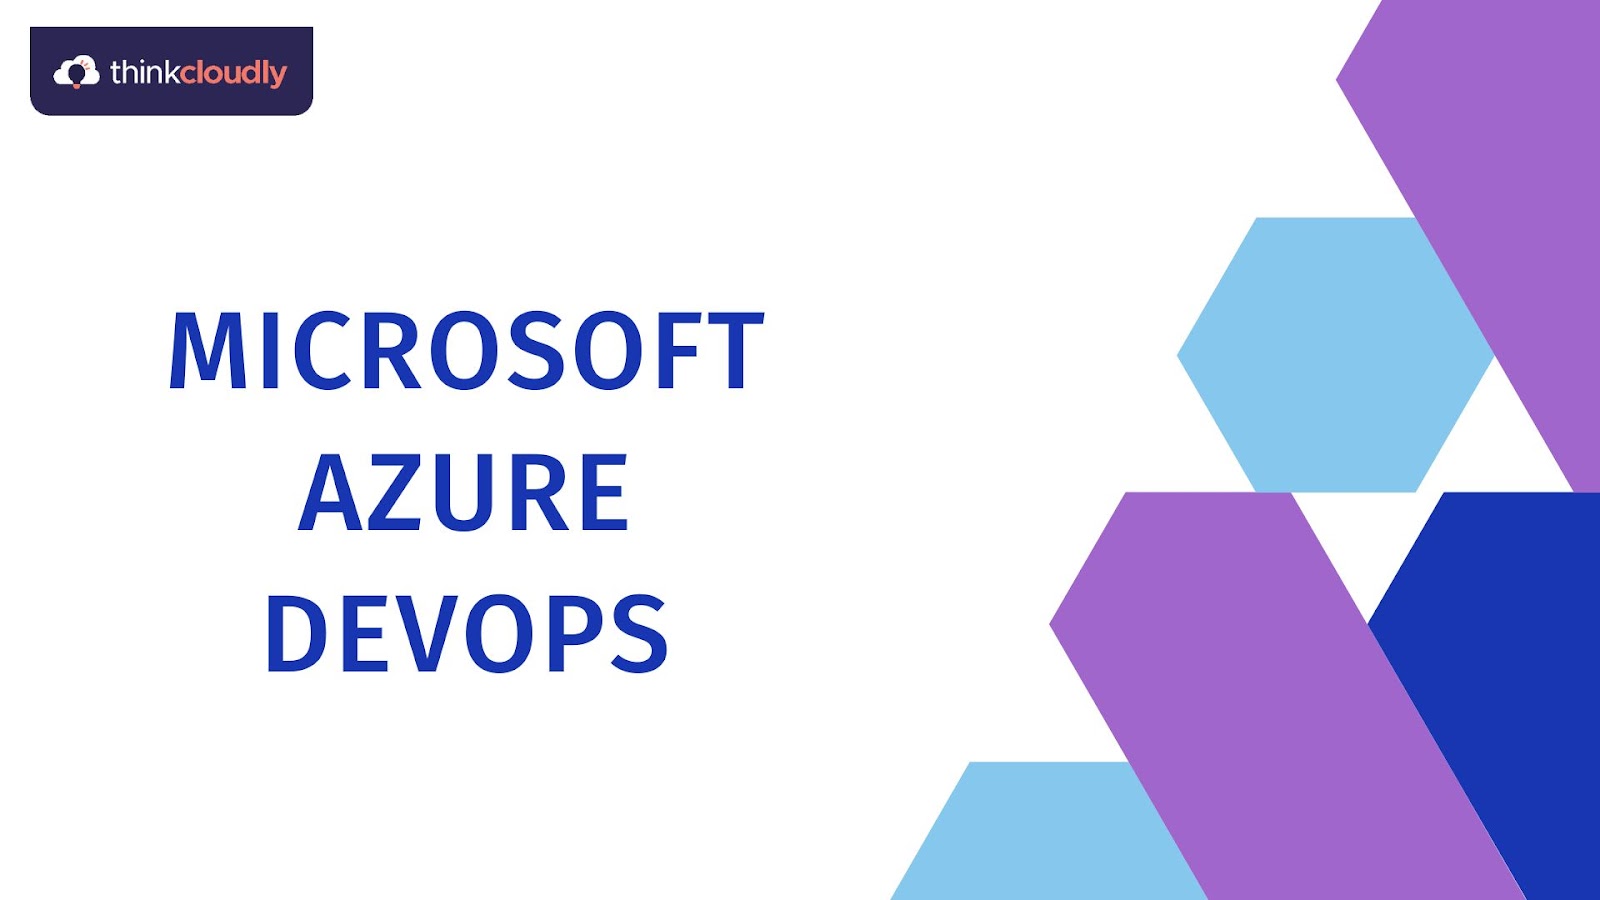 What Is Azure DevOps? The End-To-End Software Development Platform